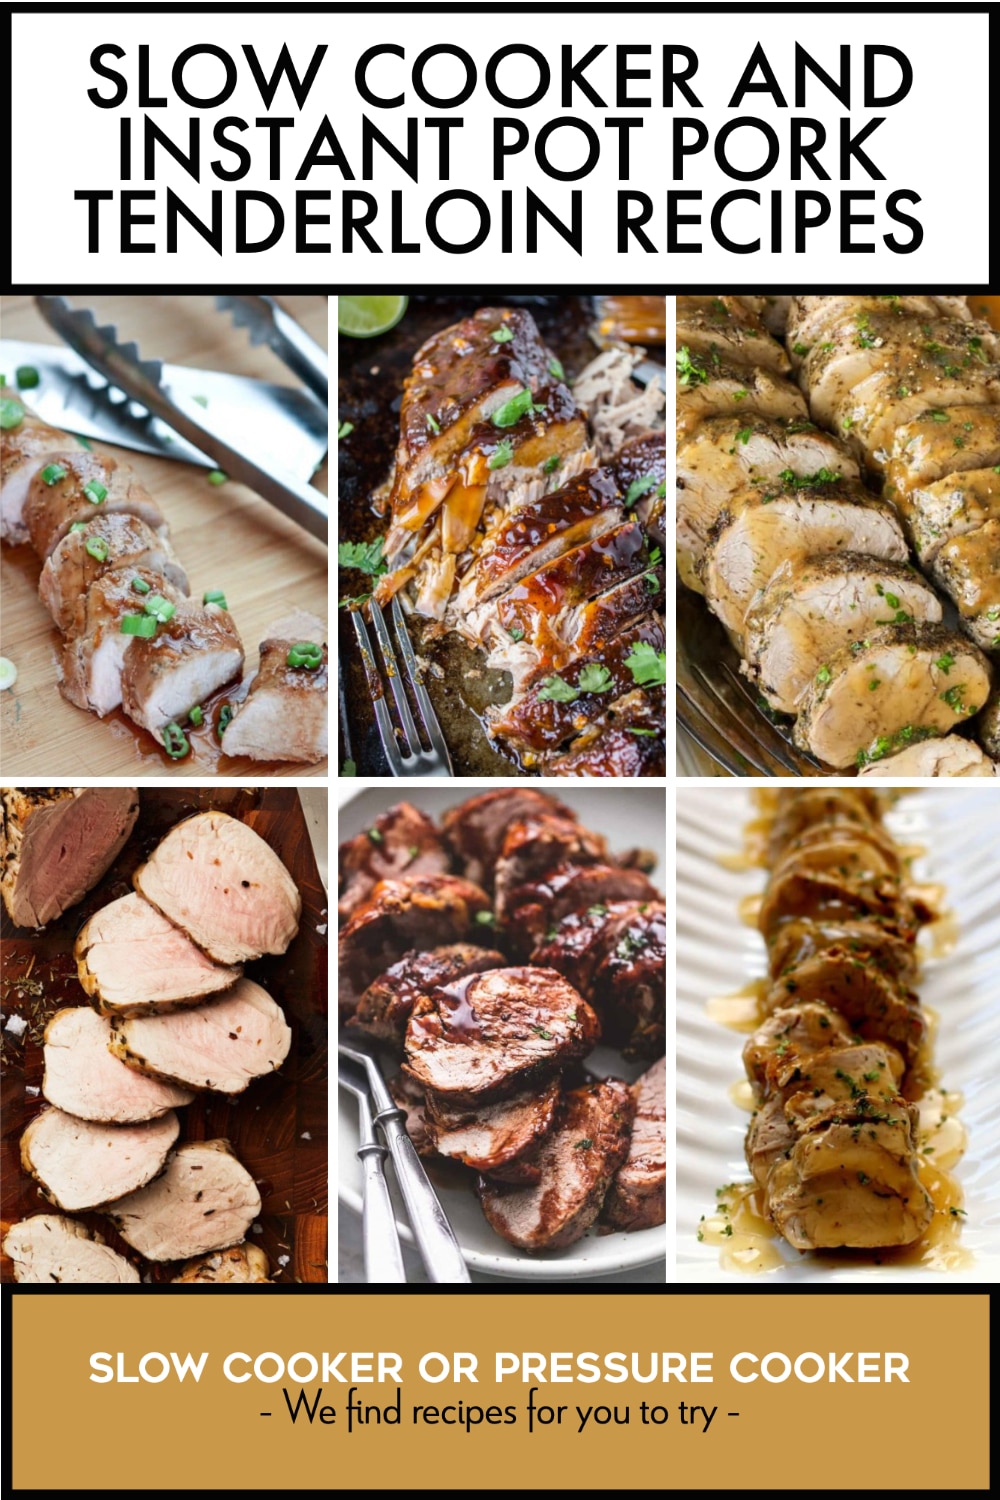 Pinterest image of Slow Cooker and Instant Pot Pork Tenderloin Recipes